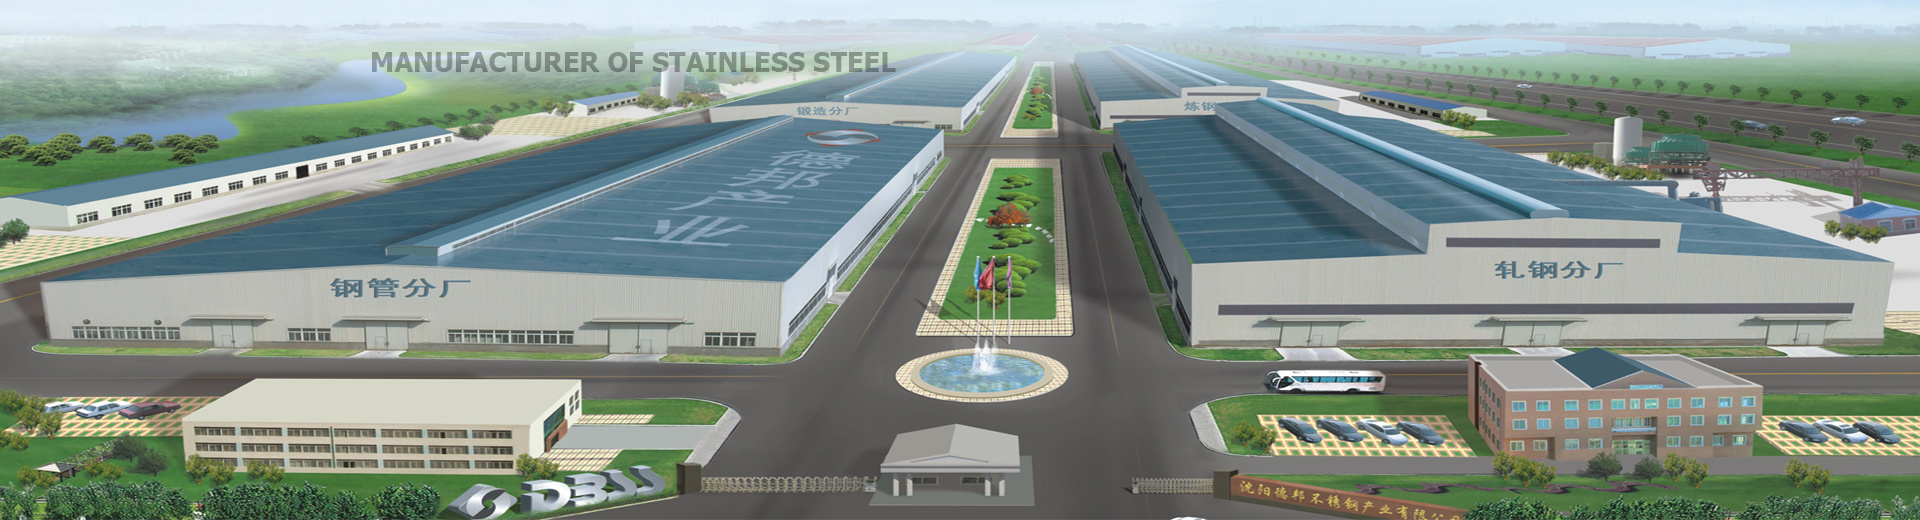 Shenyang Debang Stainless Steel Industry Co., Ltd.